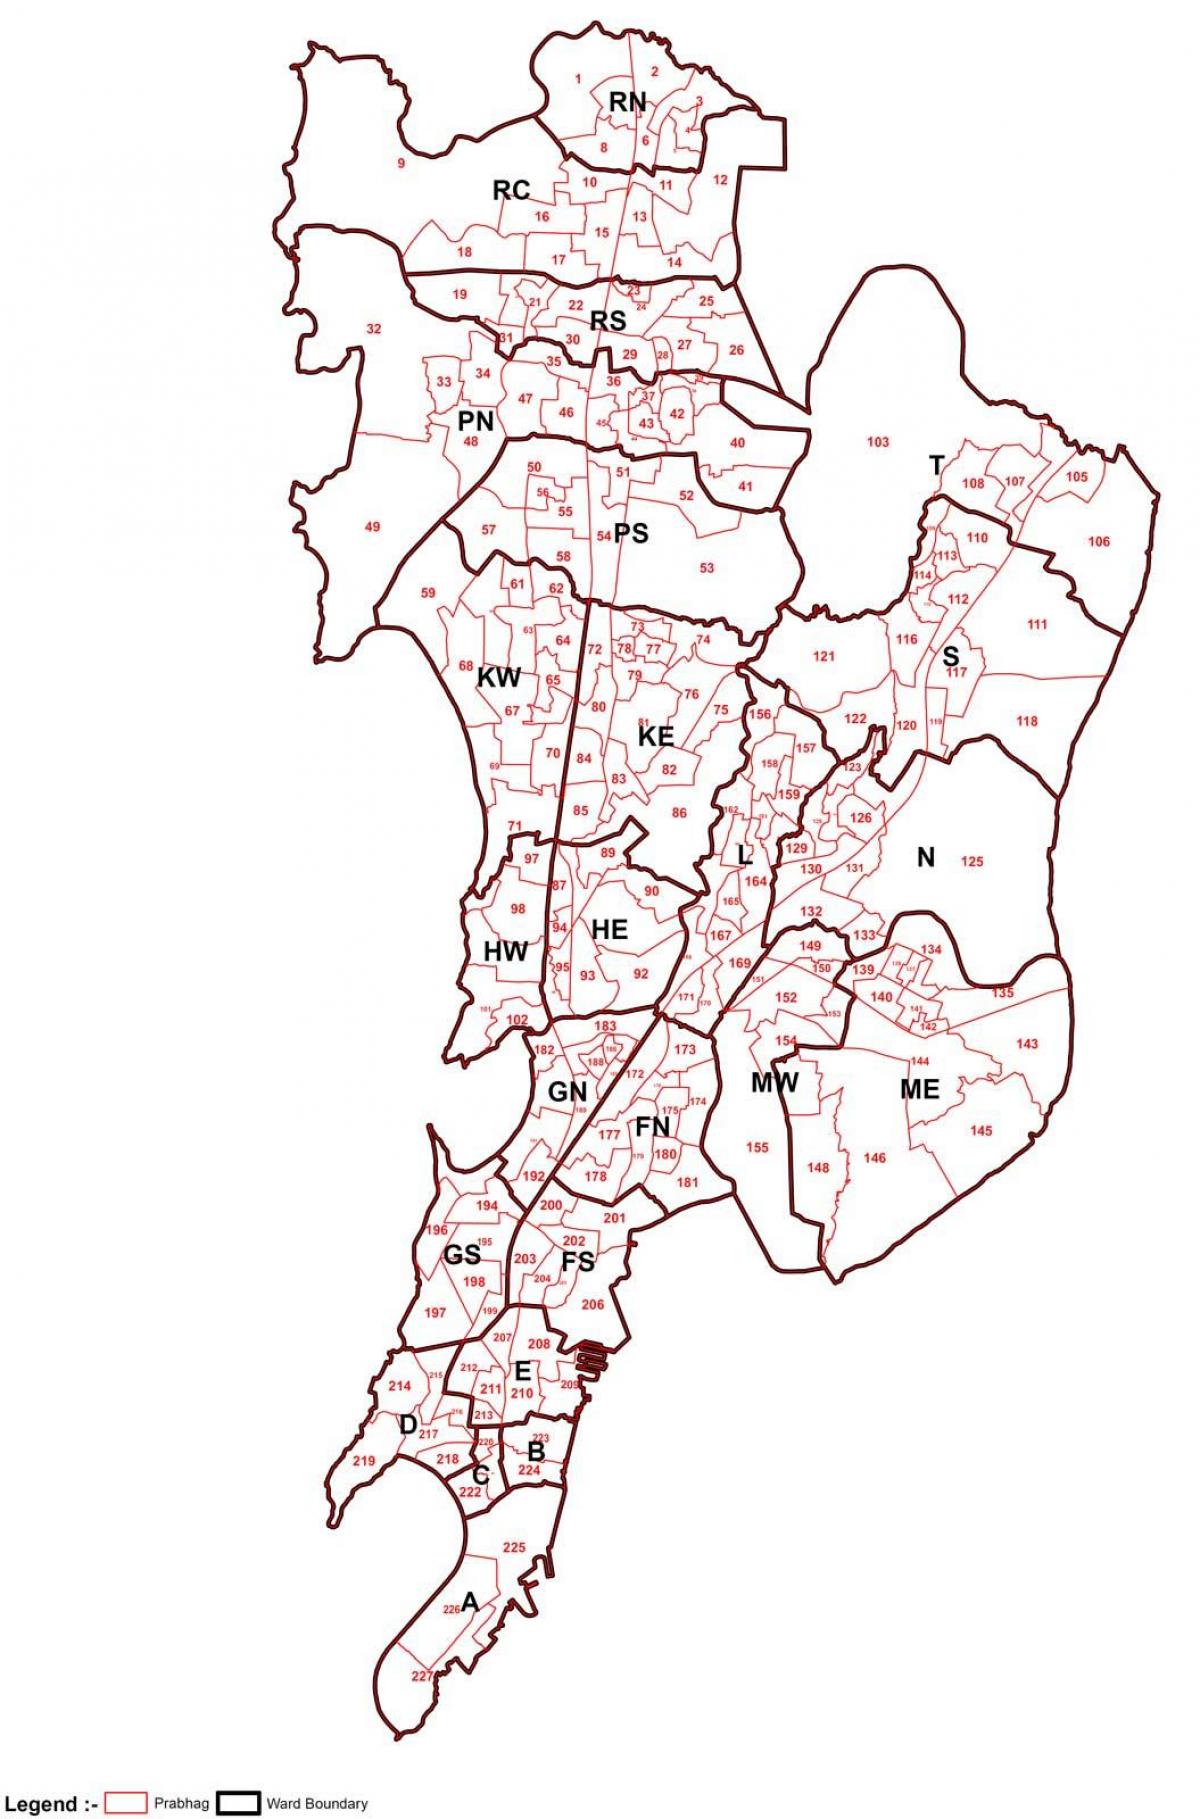 menigheten kart over Mumbai